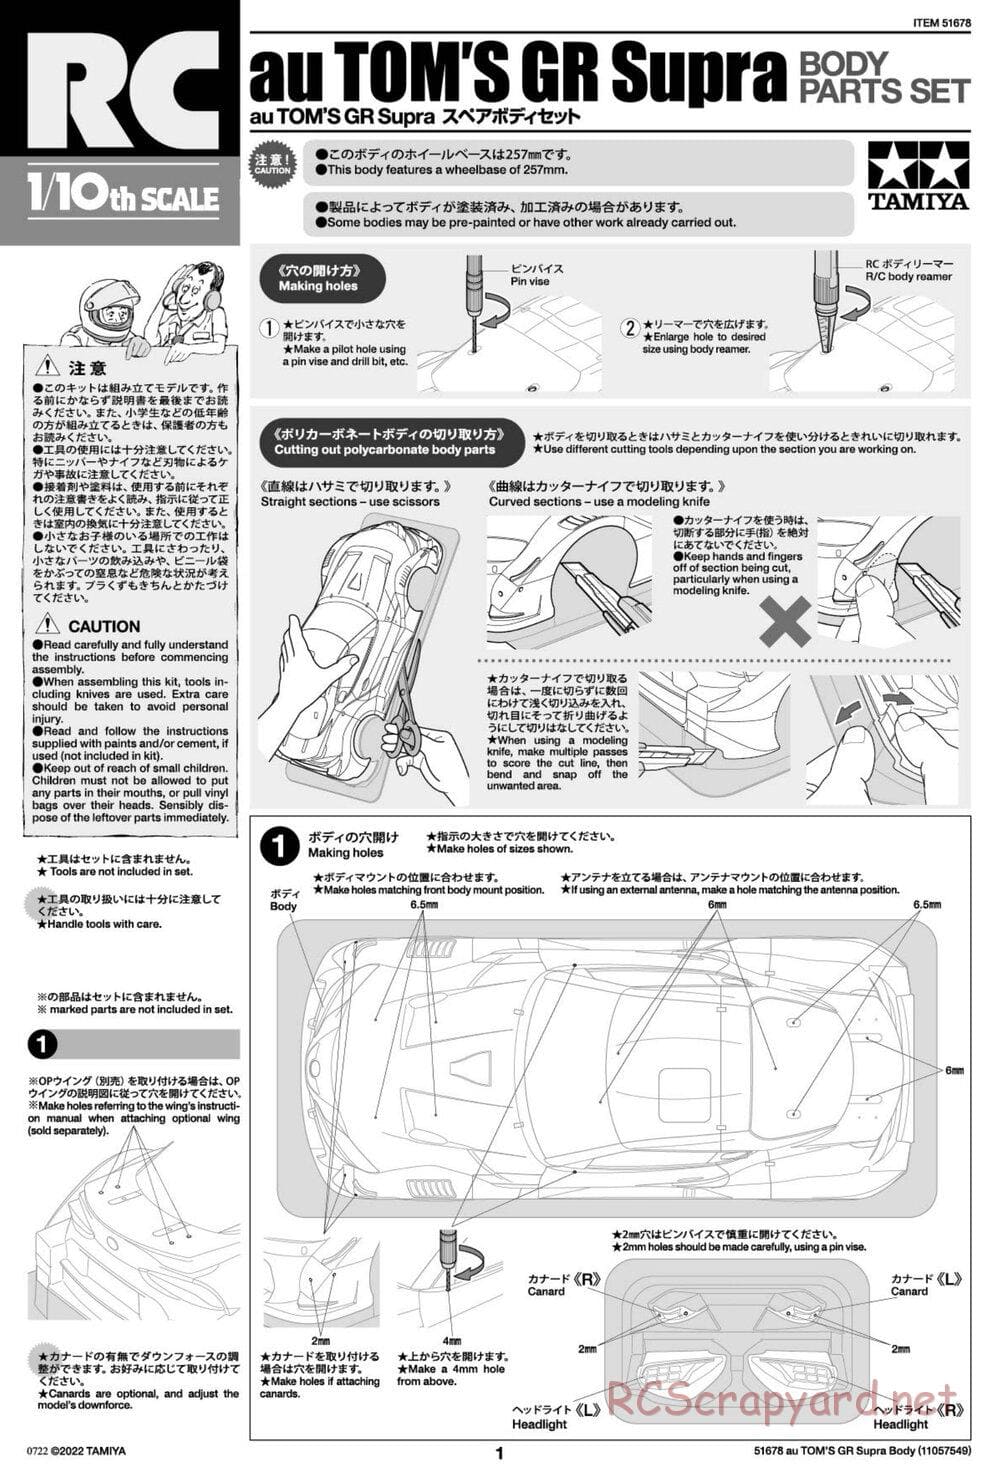 Tamiya - au TOM'S GR Supra - TT-02 Chassis - Body Manual - Page 1